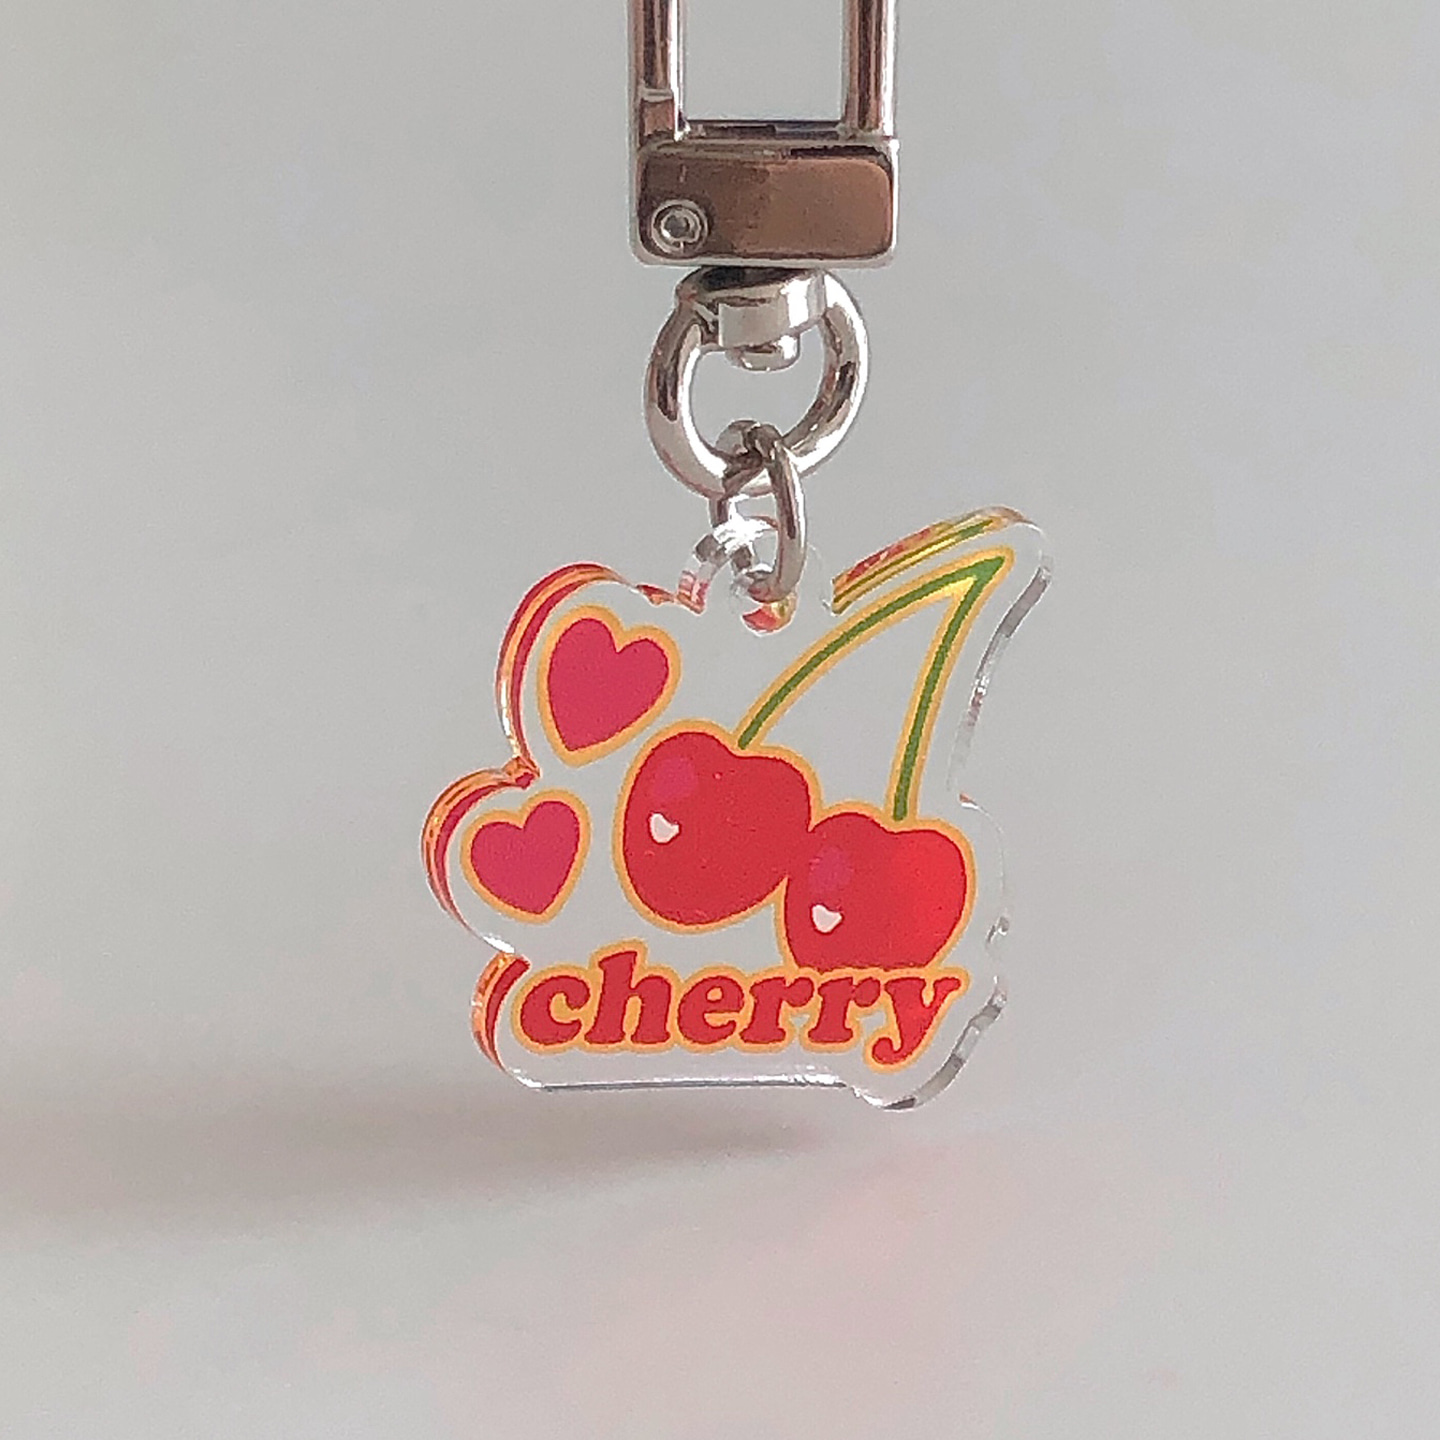 Cherry cherry key ring (아크릴)